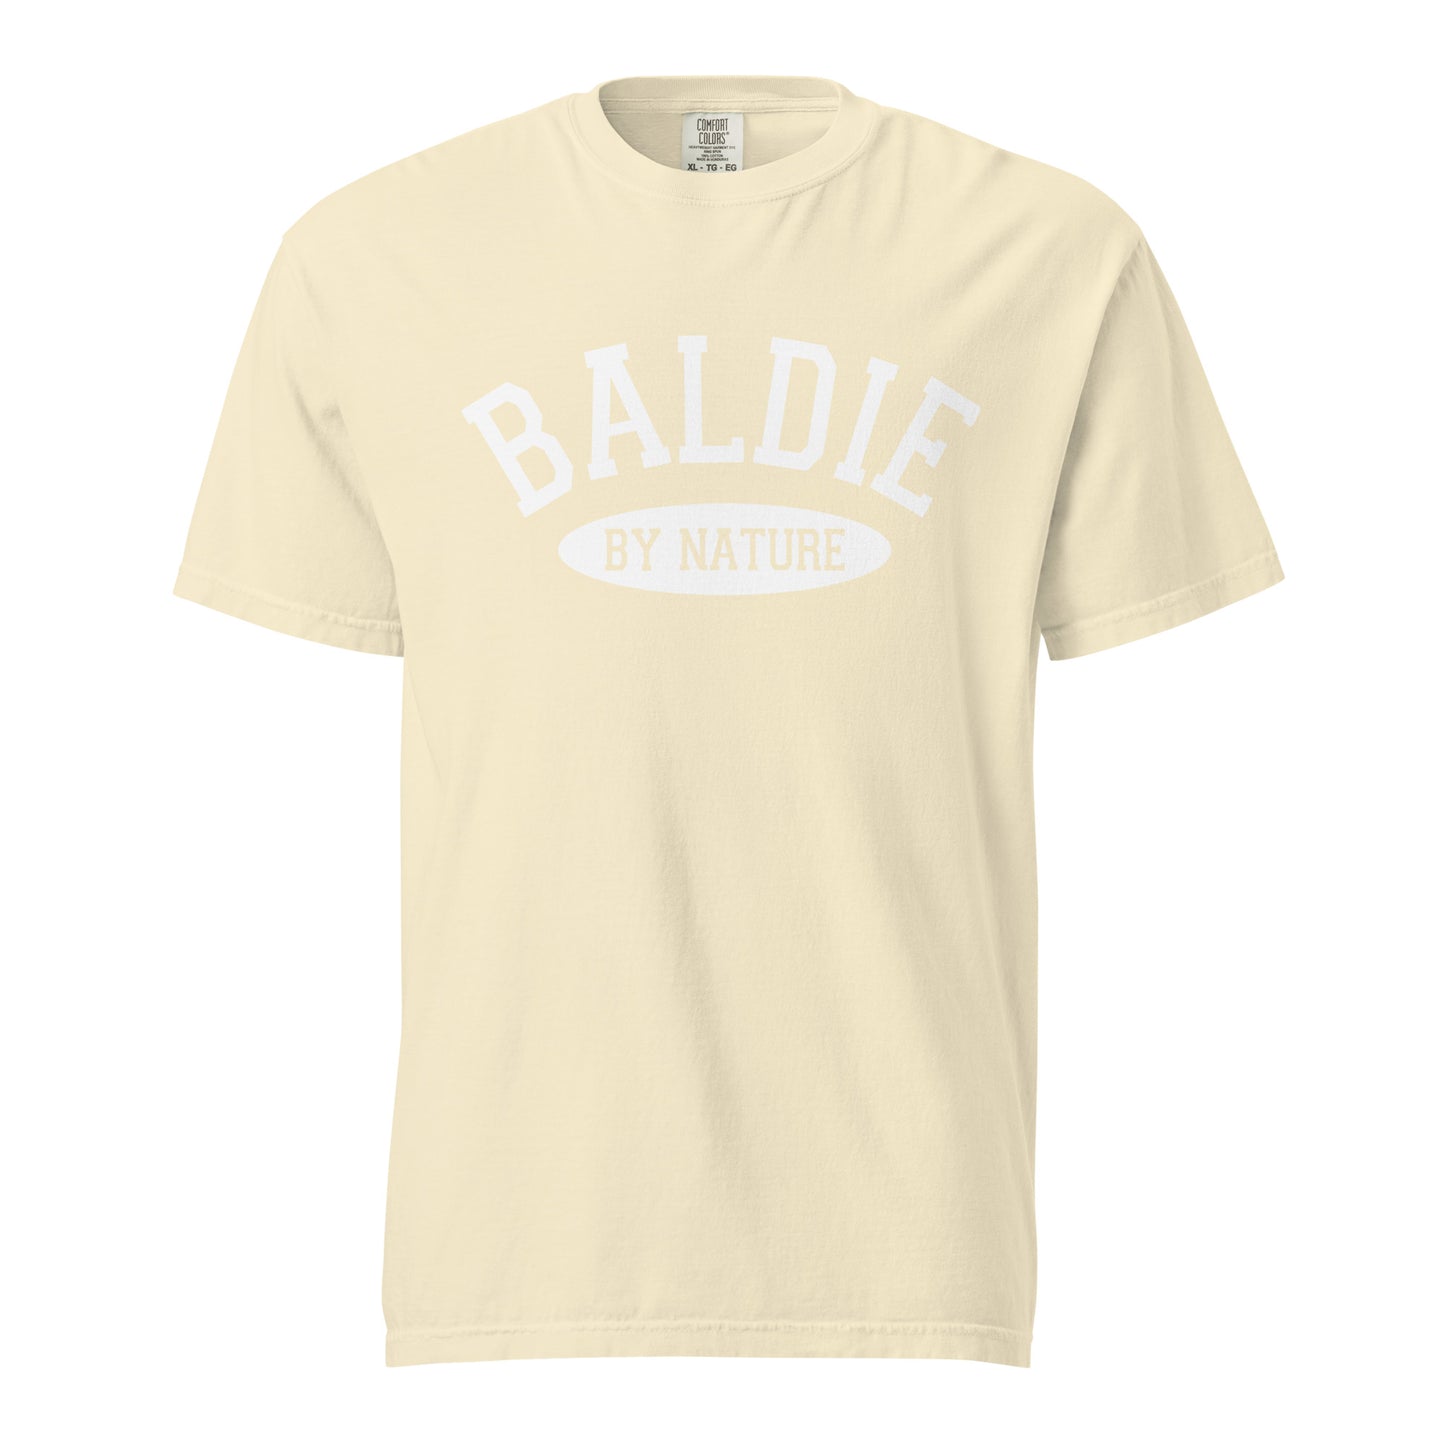 Baldie by Nature Shirt